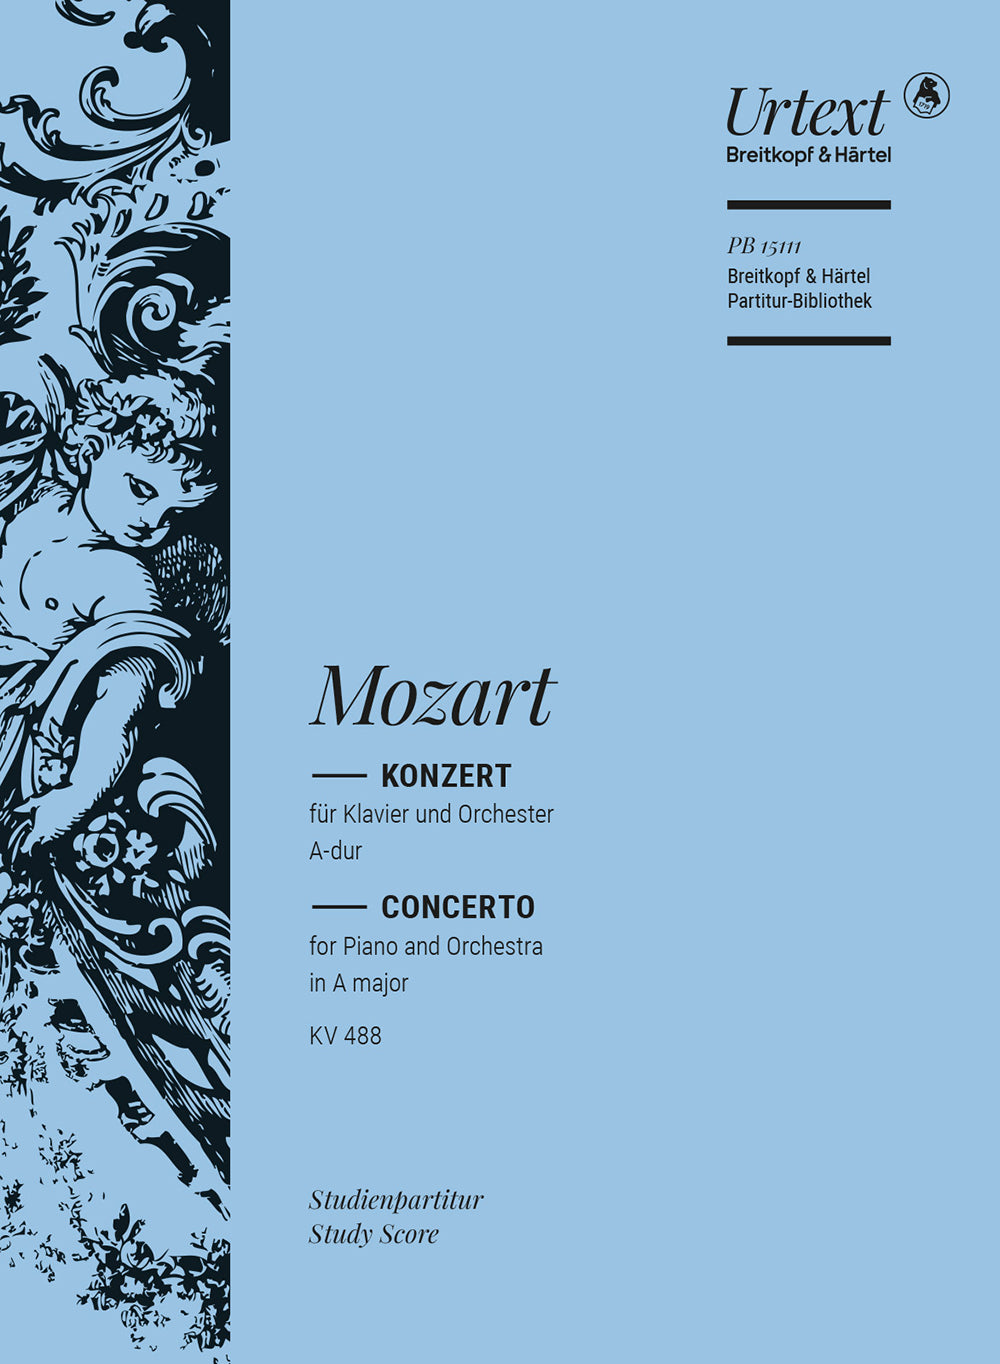 Mozart Piano Concerto No. 23 in A major K. 488 (Study Score)